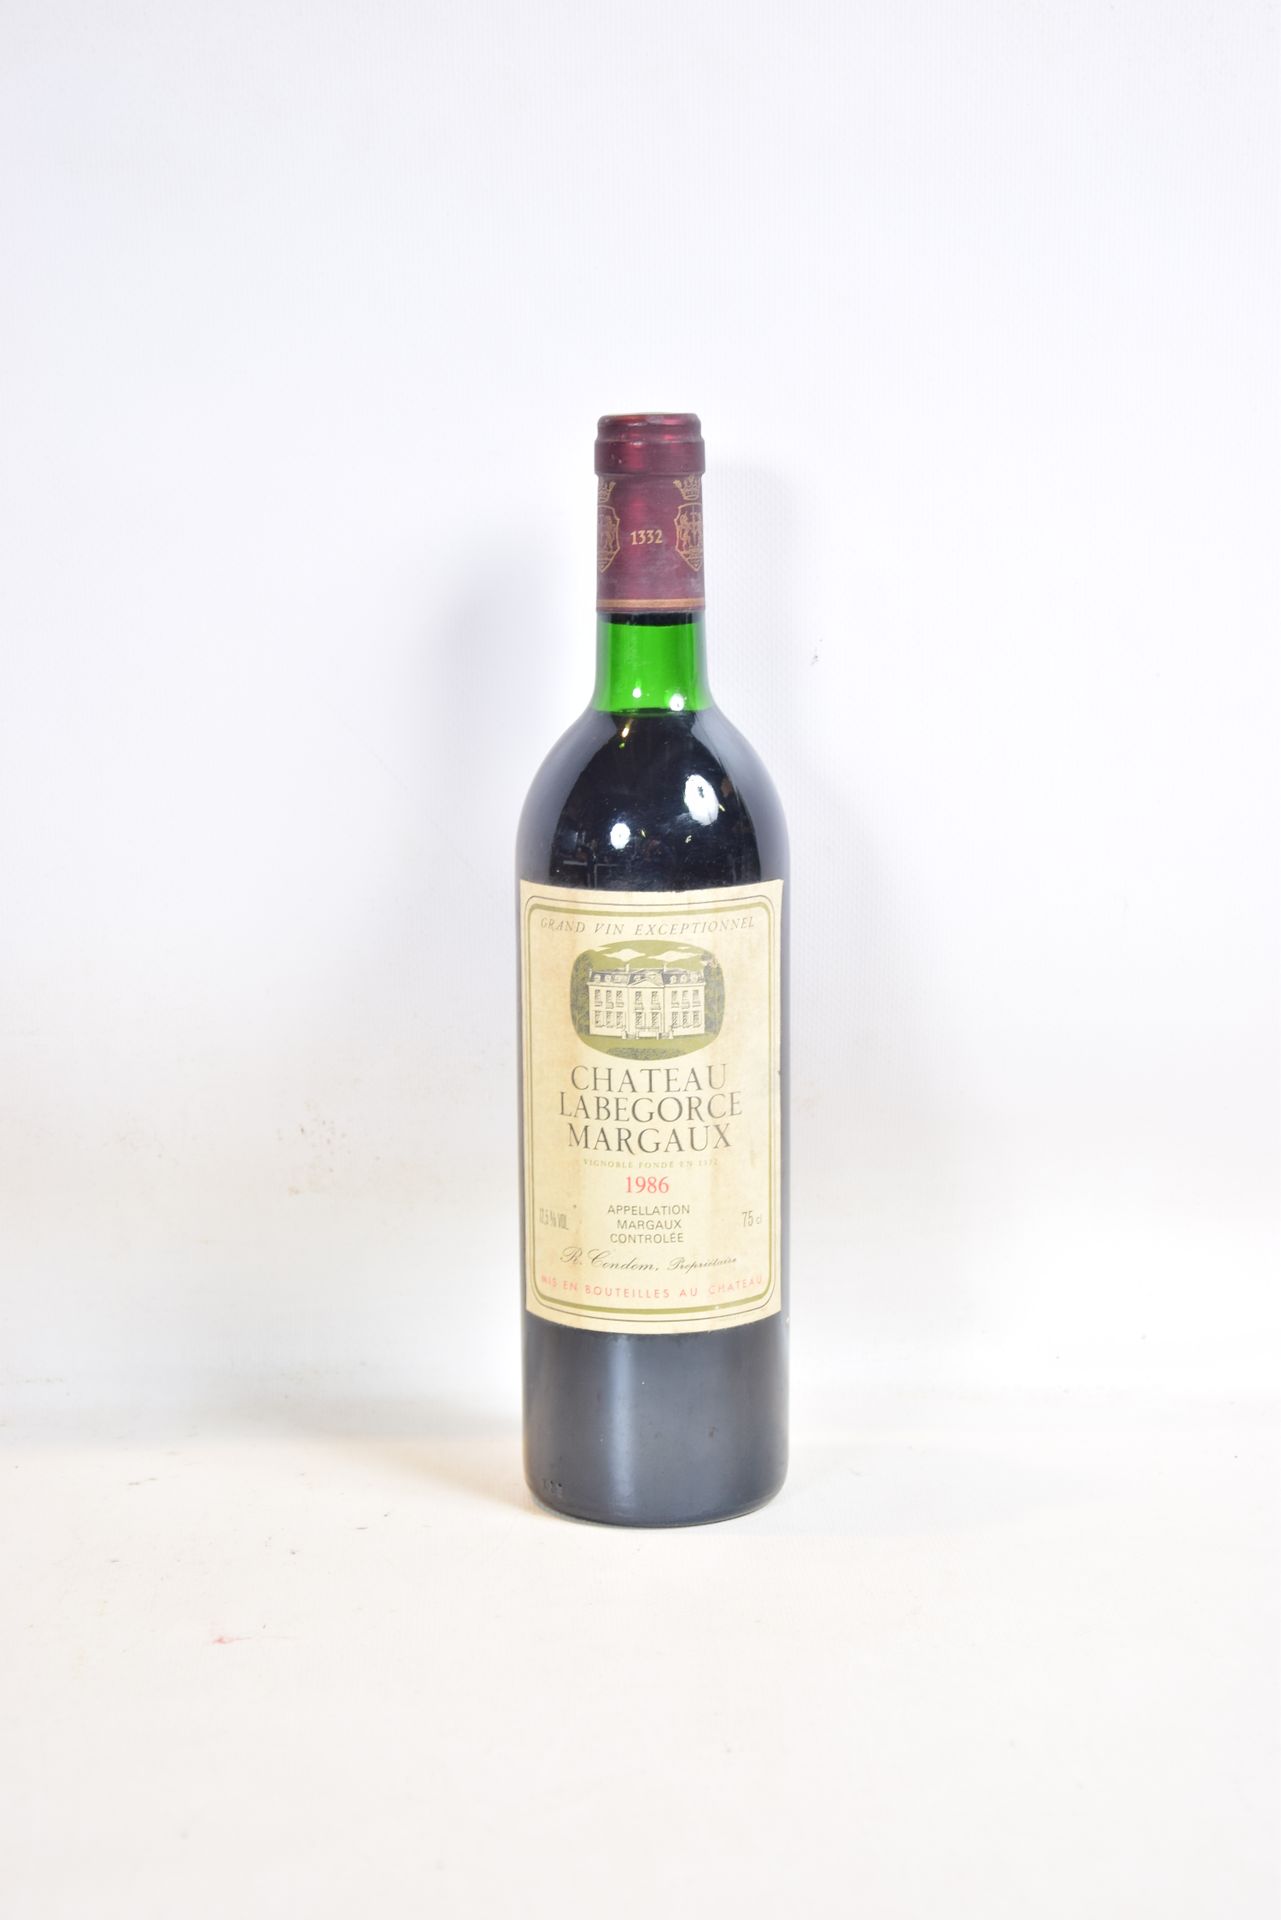 Null 1 Blle CH.拉贝戈尔斯-玛歌葡萄酒 1986

	而且。有点褪色，有污渍。N：肩部顶部的限制。